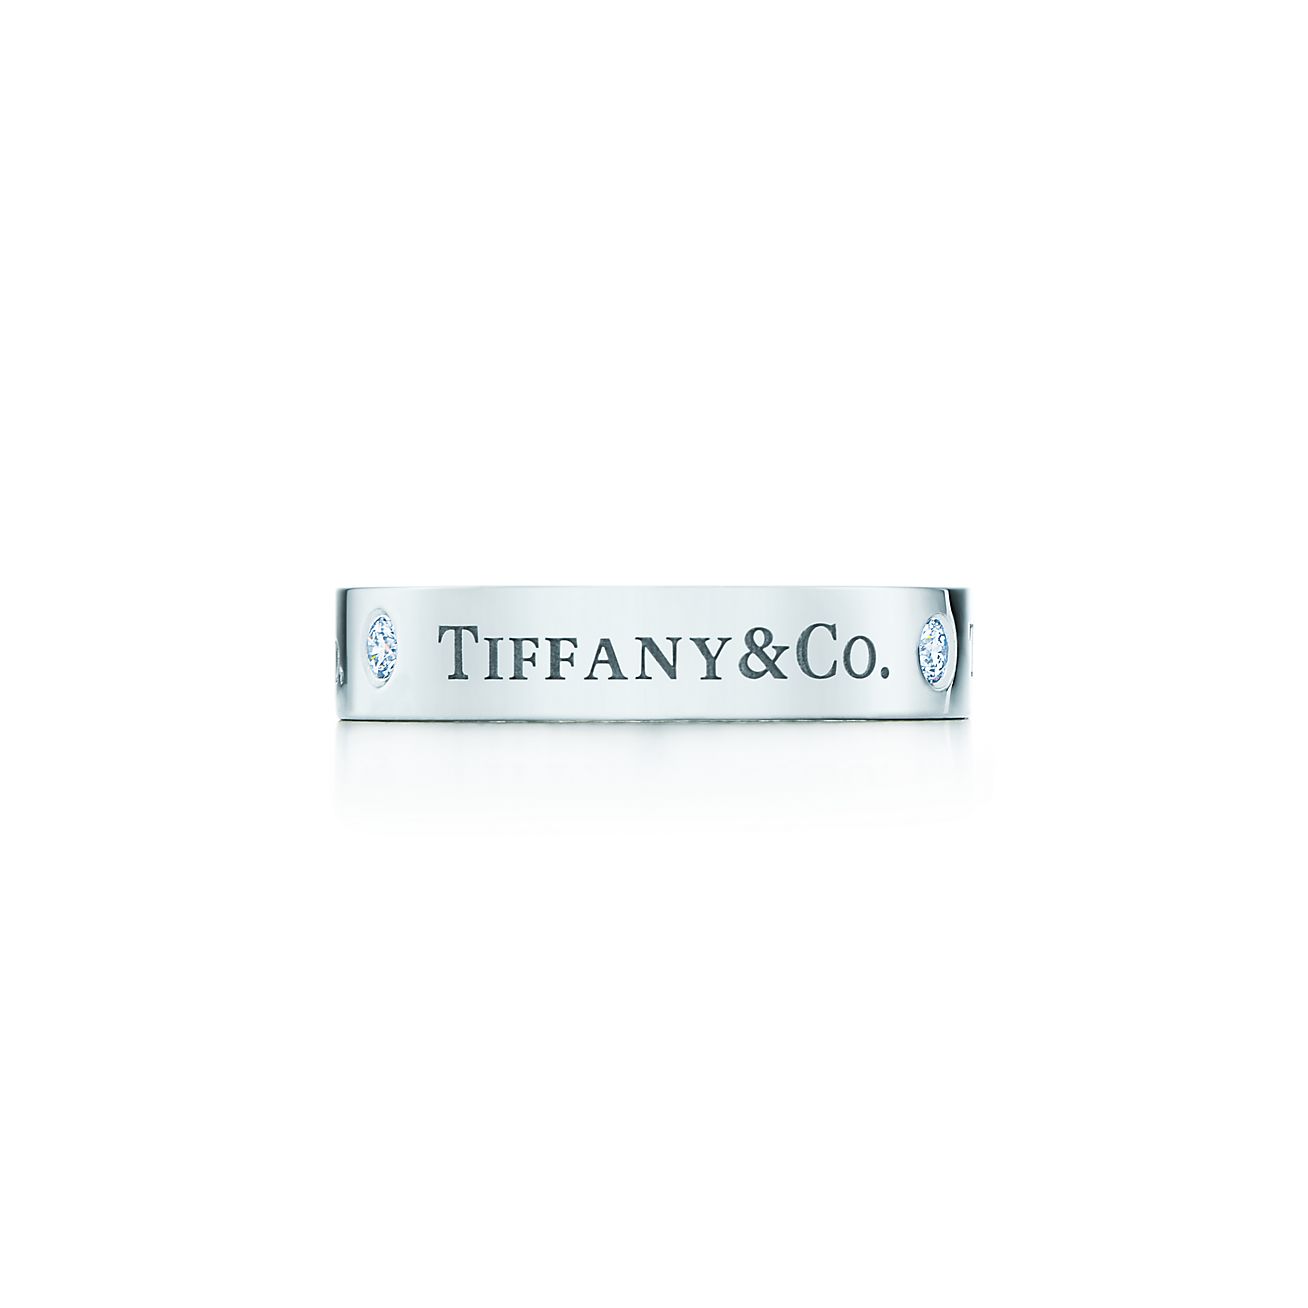 tiffany & co band ring